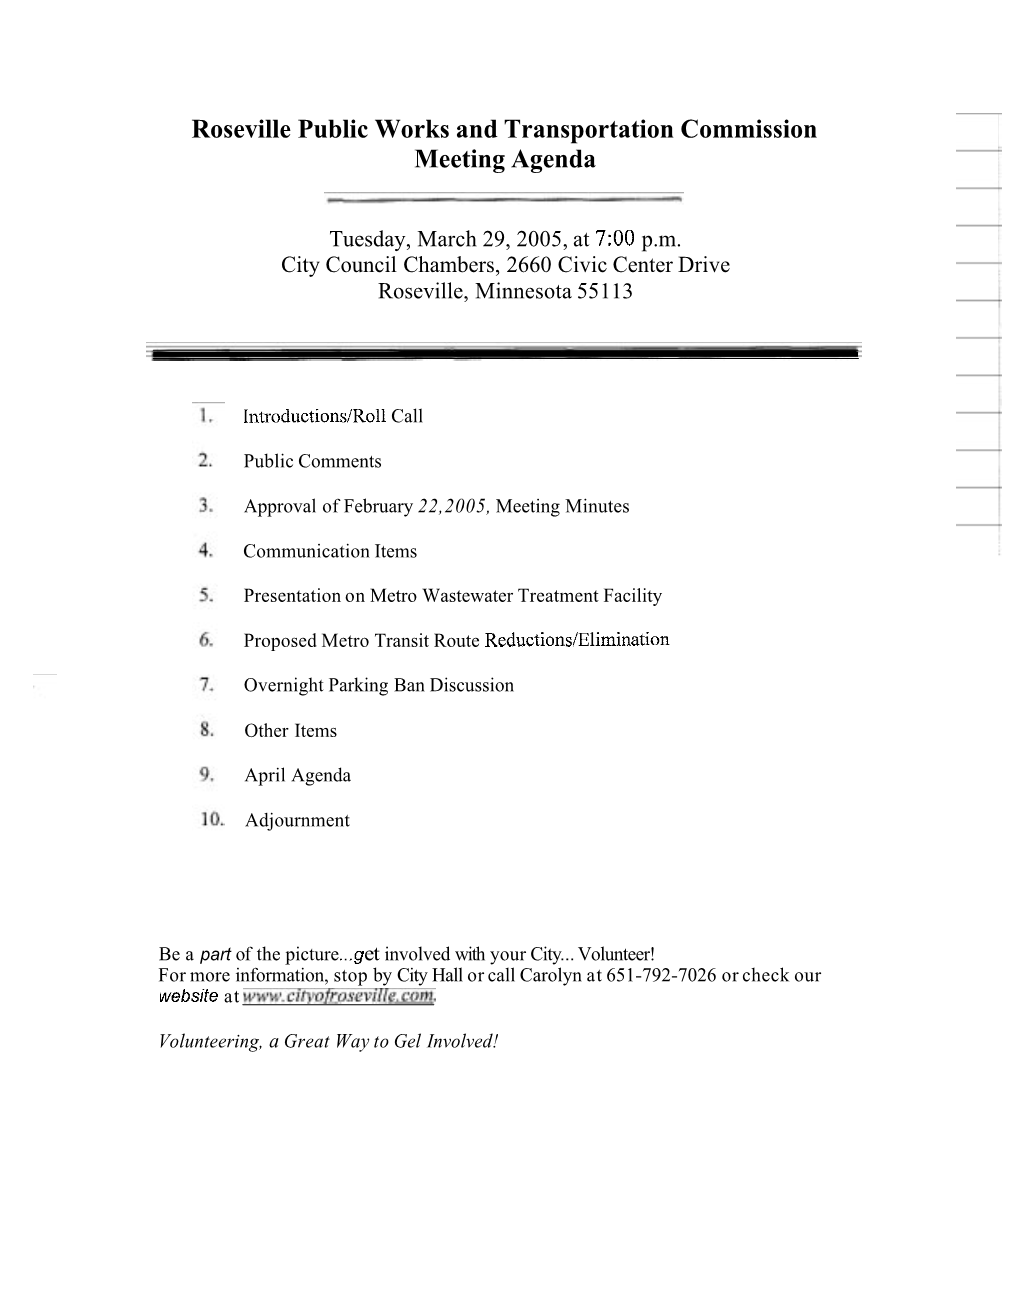 Roseville Public Works and Transportation Commission Meeting Agenda